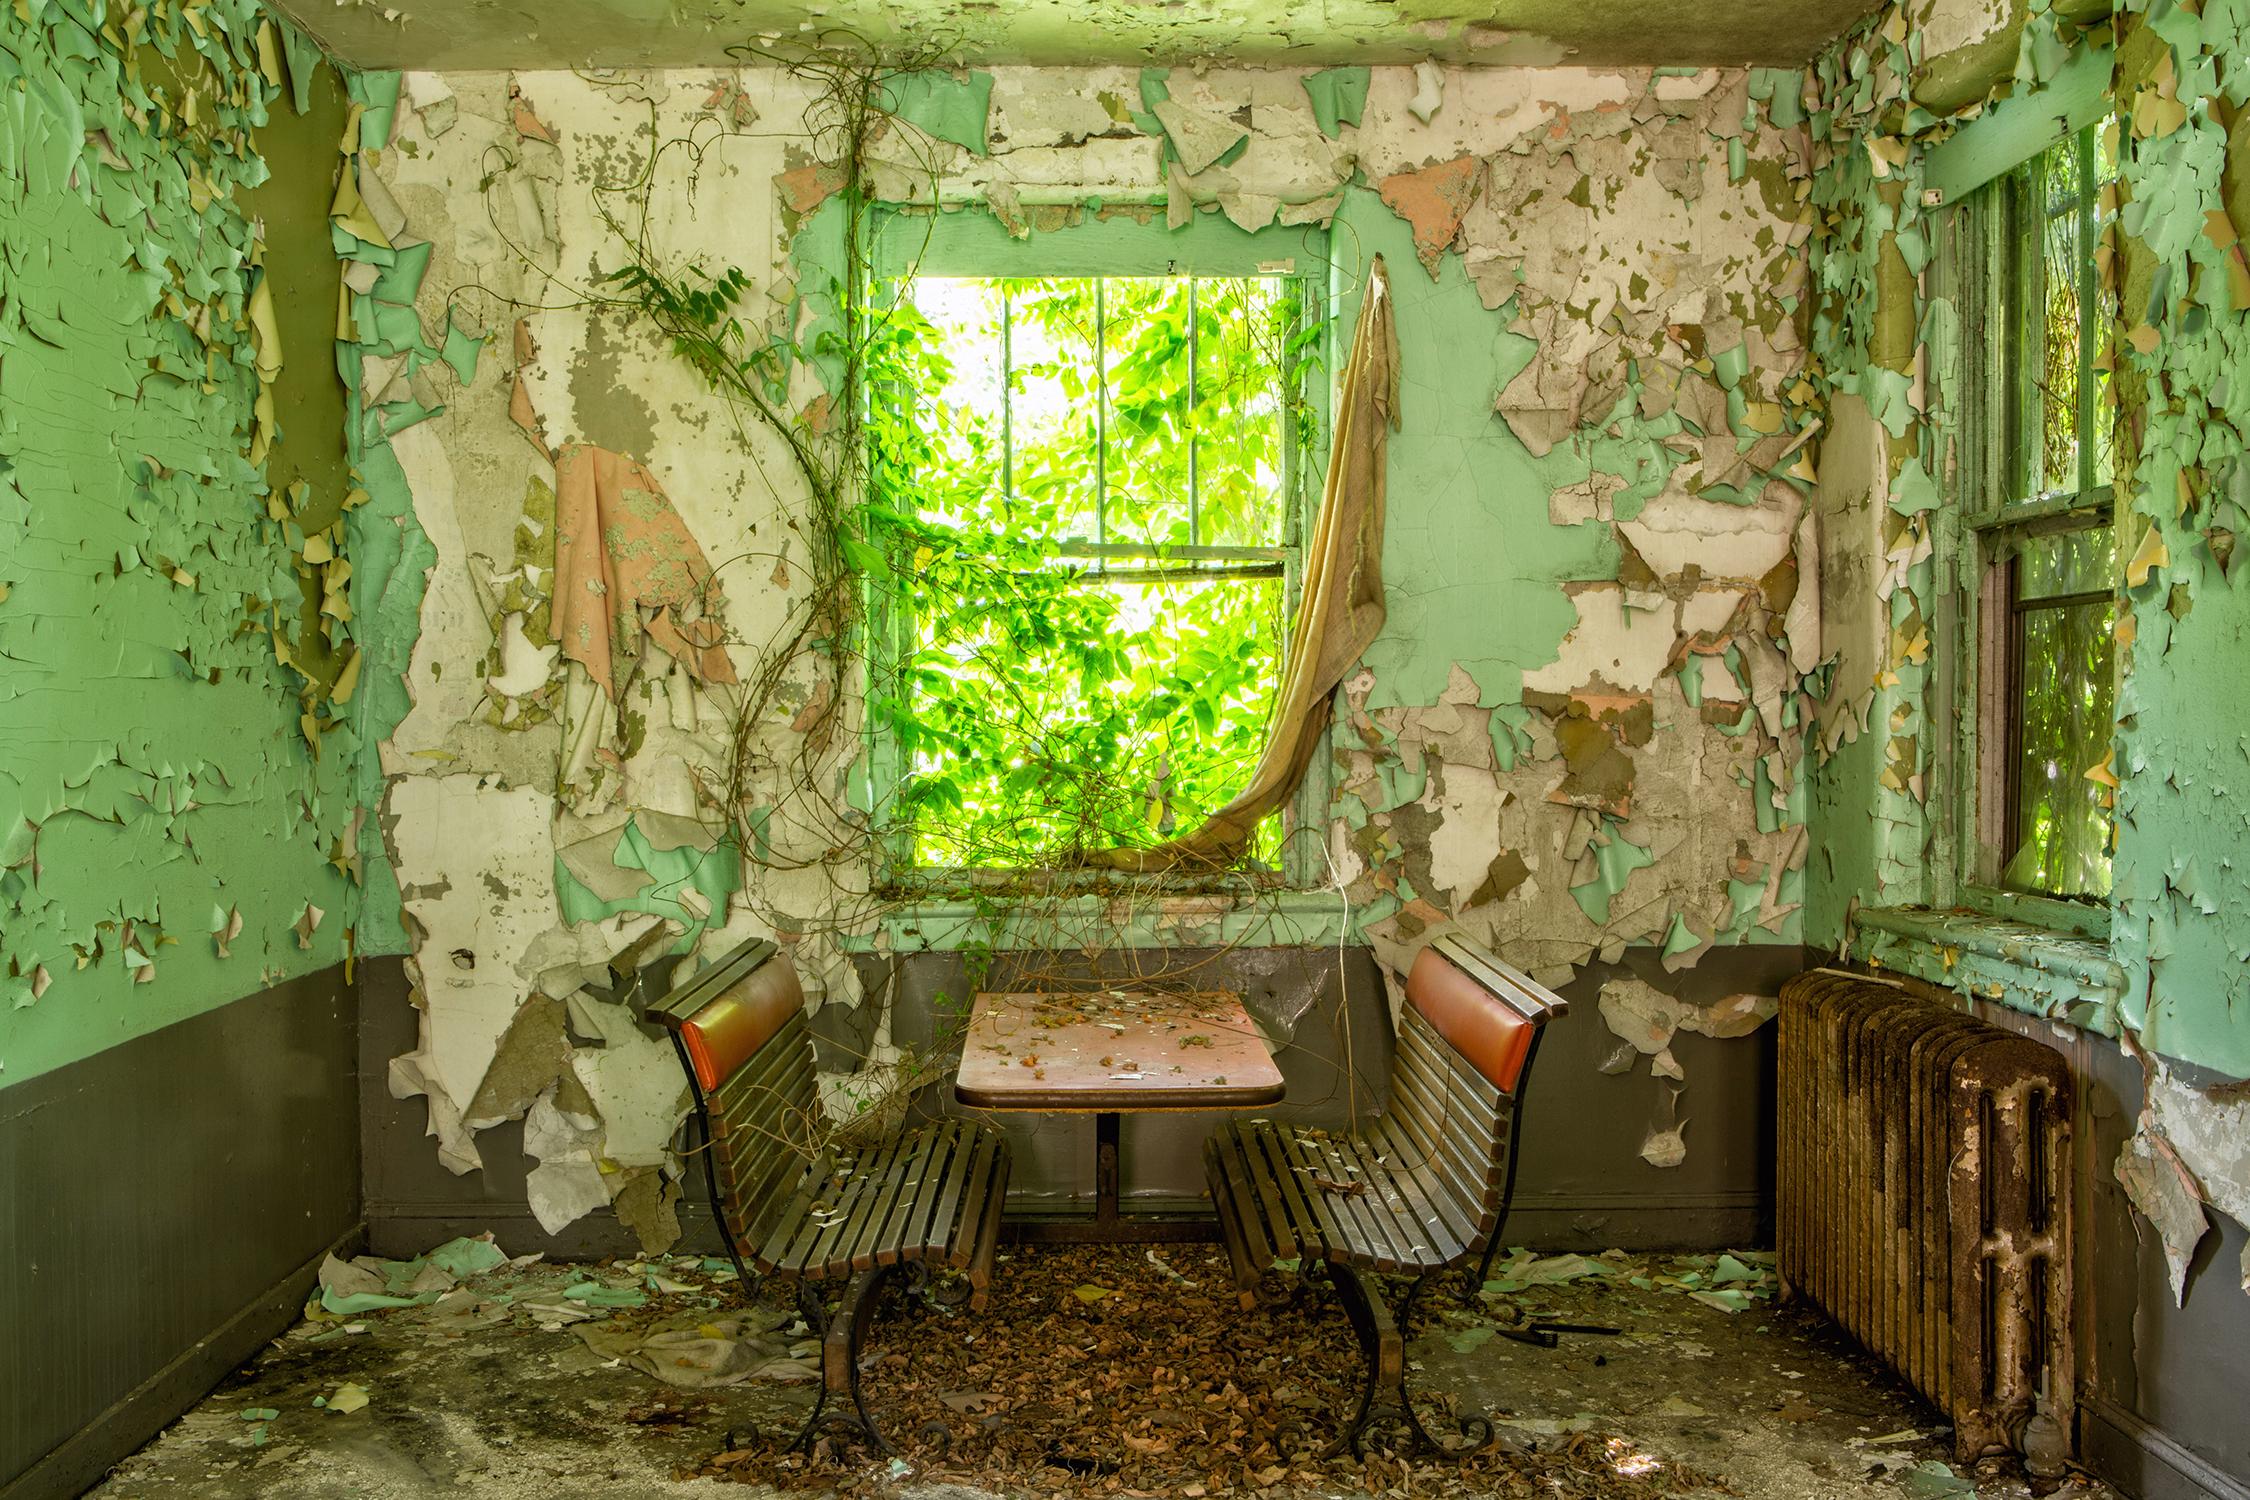 Rebecca Skinner Color Photograph - "Inward", interior, abandoned, nature, peeling paint, window, green, photograph